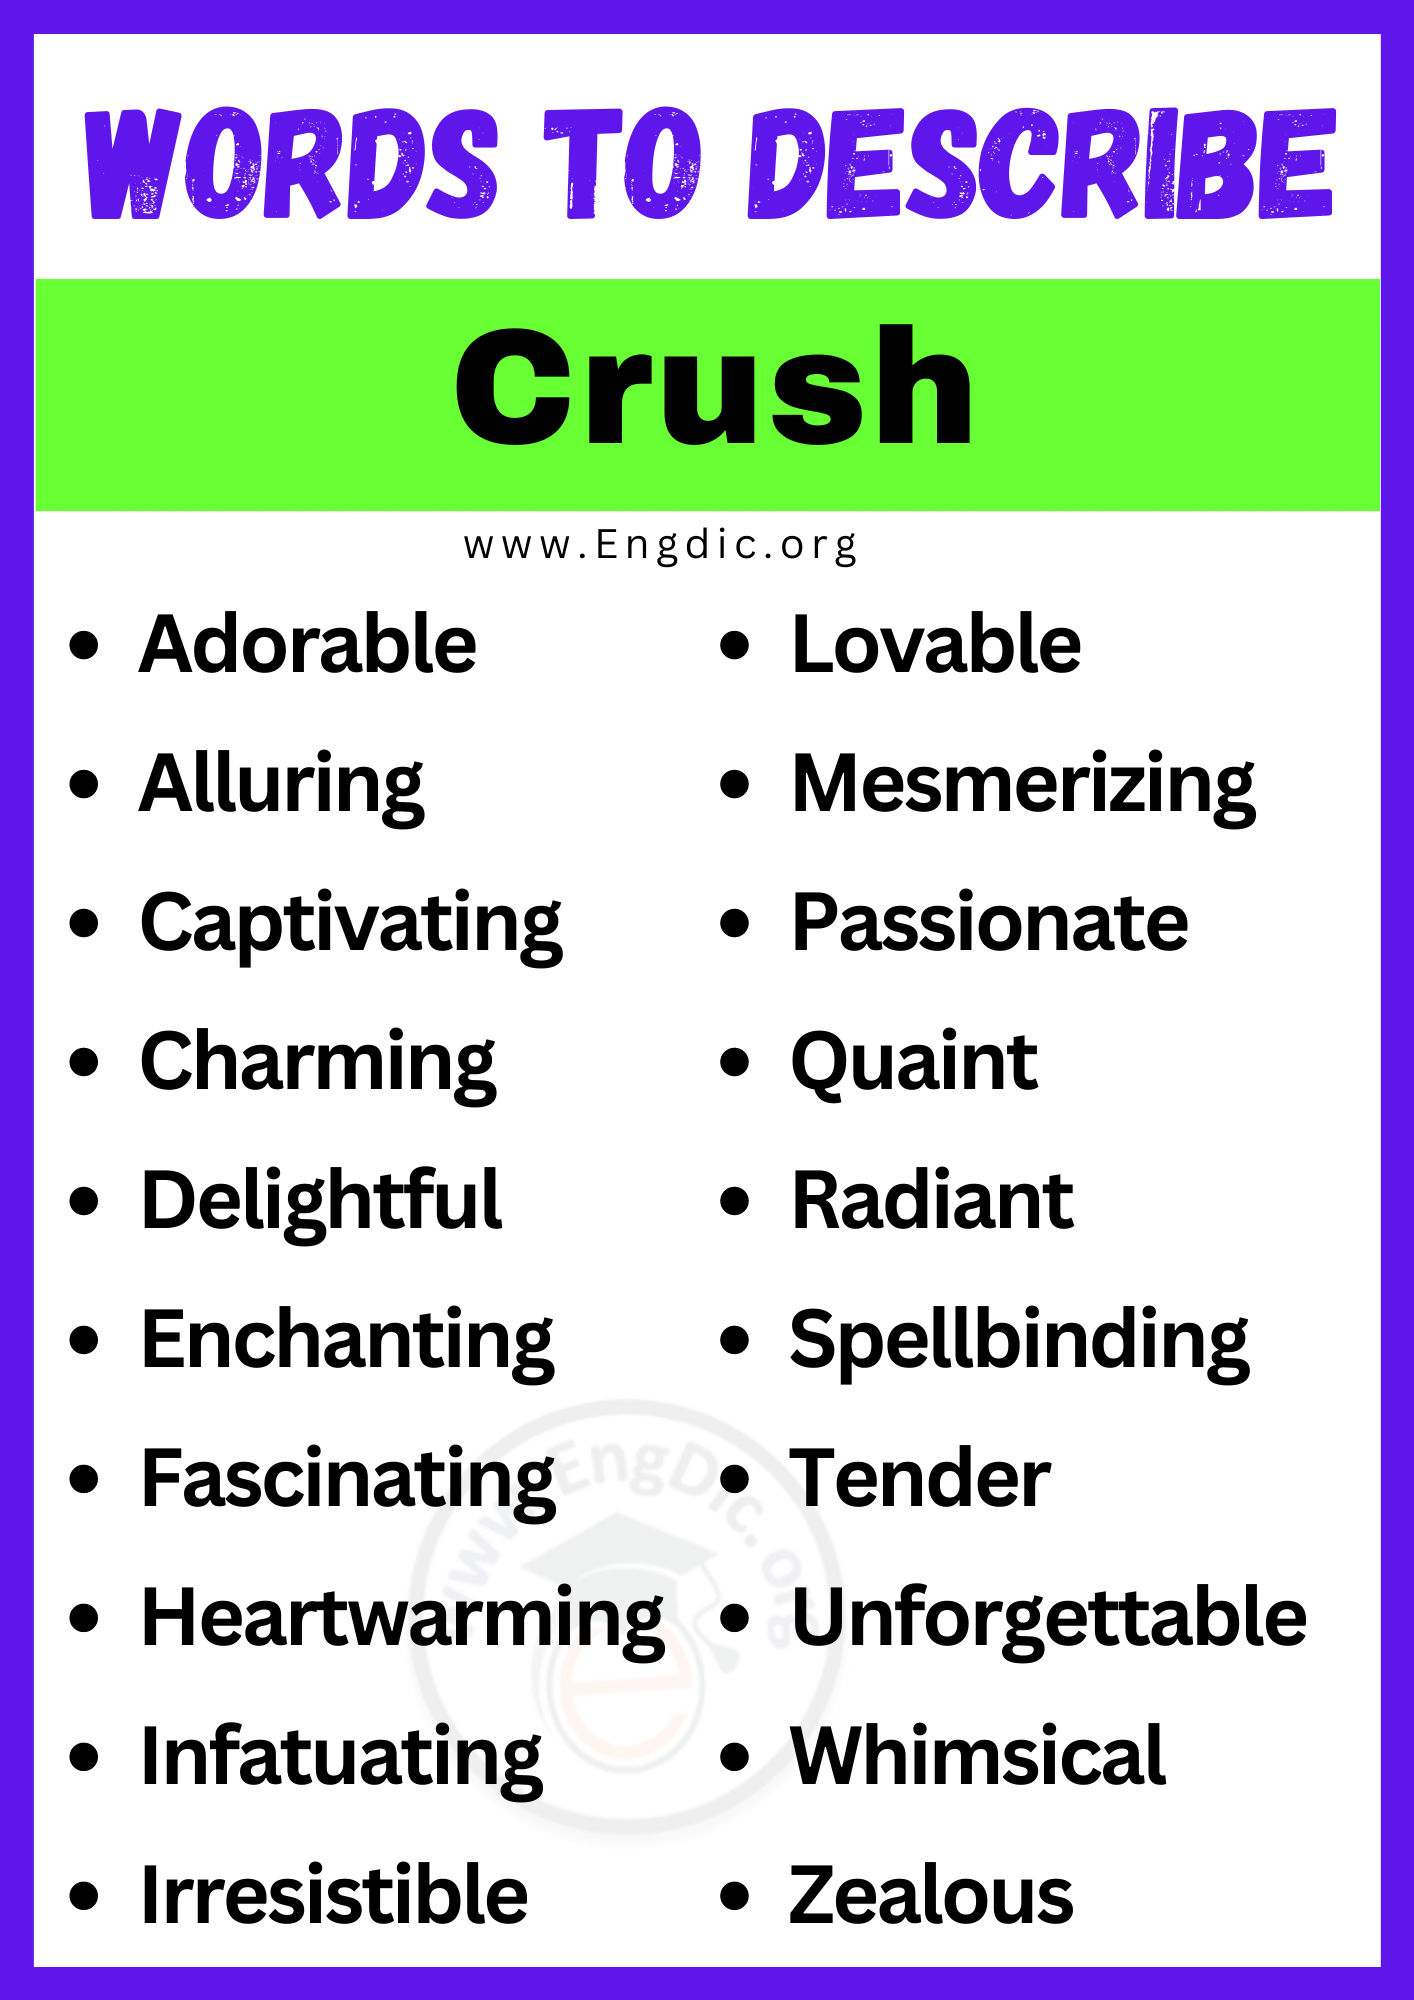 Words to Describe Crush